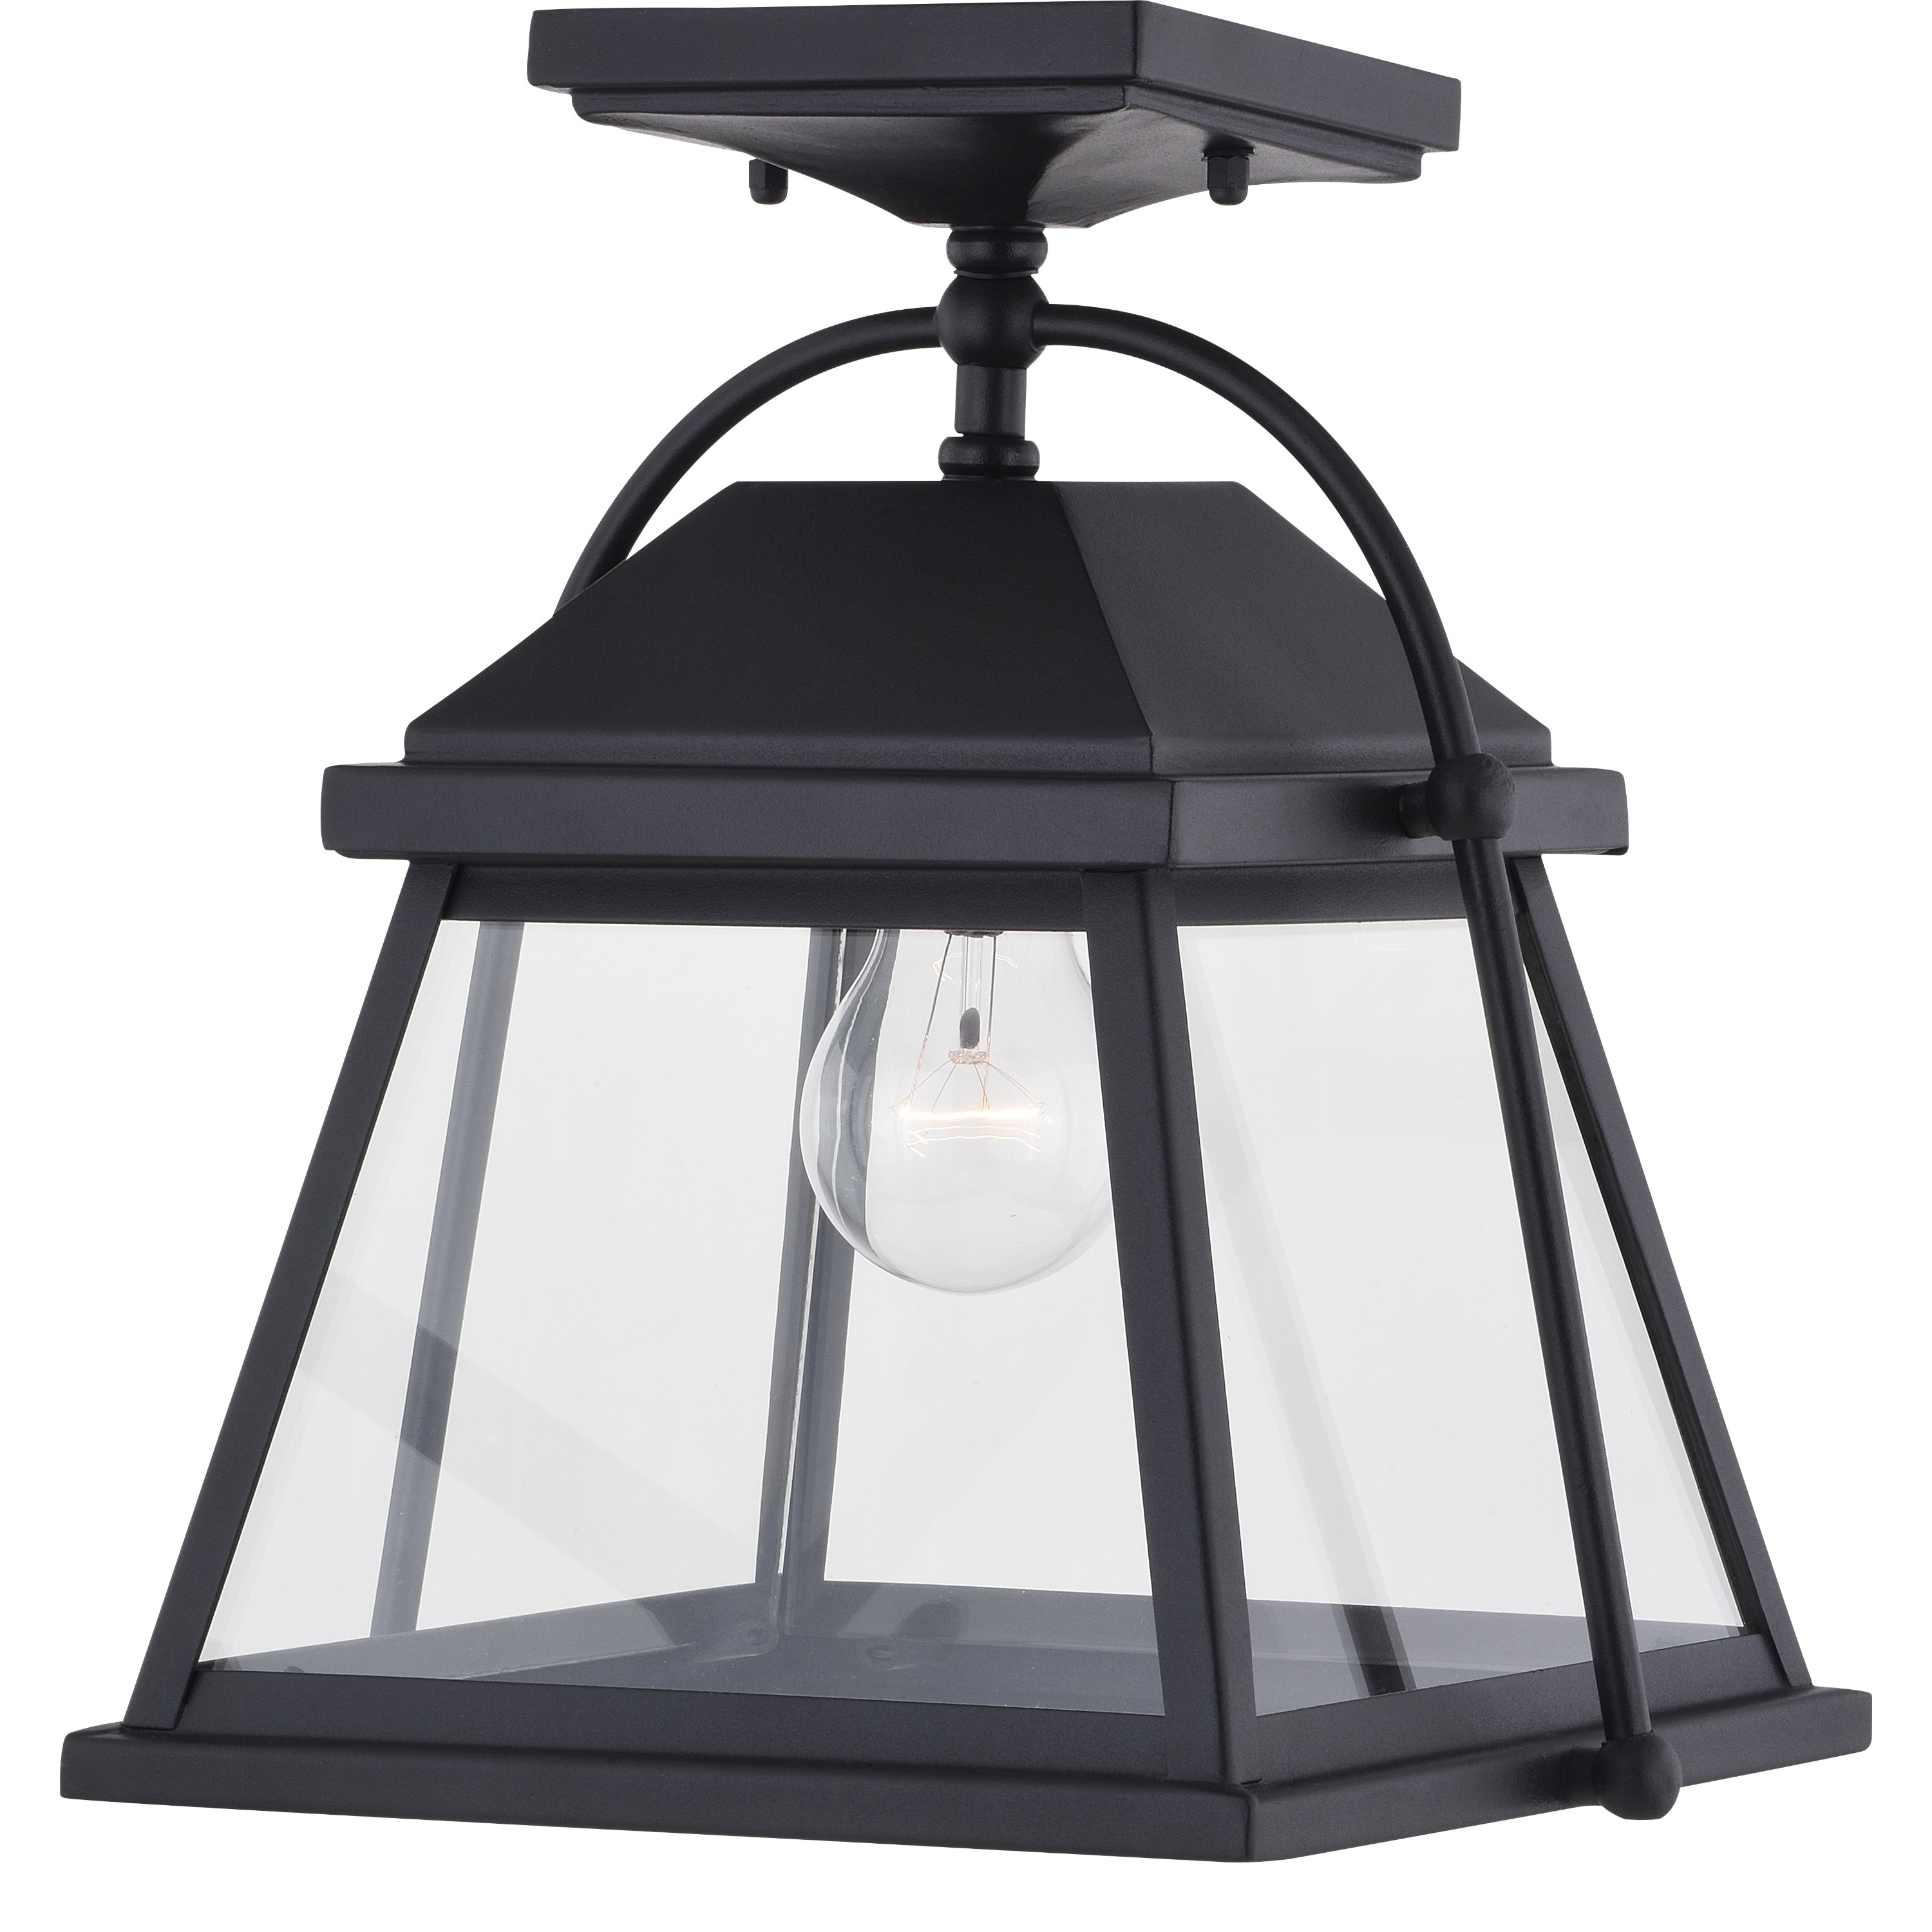 Lexington Black Outdoor Flush Mount Ceiling Light Lantern Clear Glass 10 75 In W X 11 5 In H X 9 In D Overstock 31059849